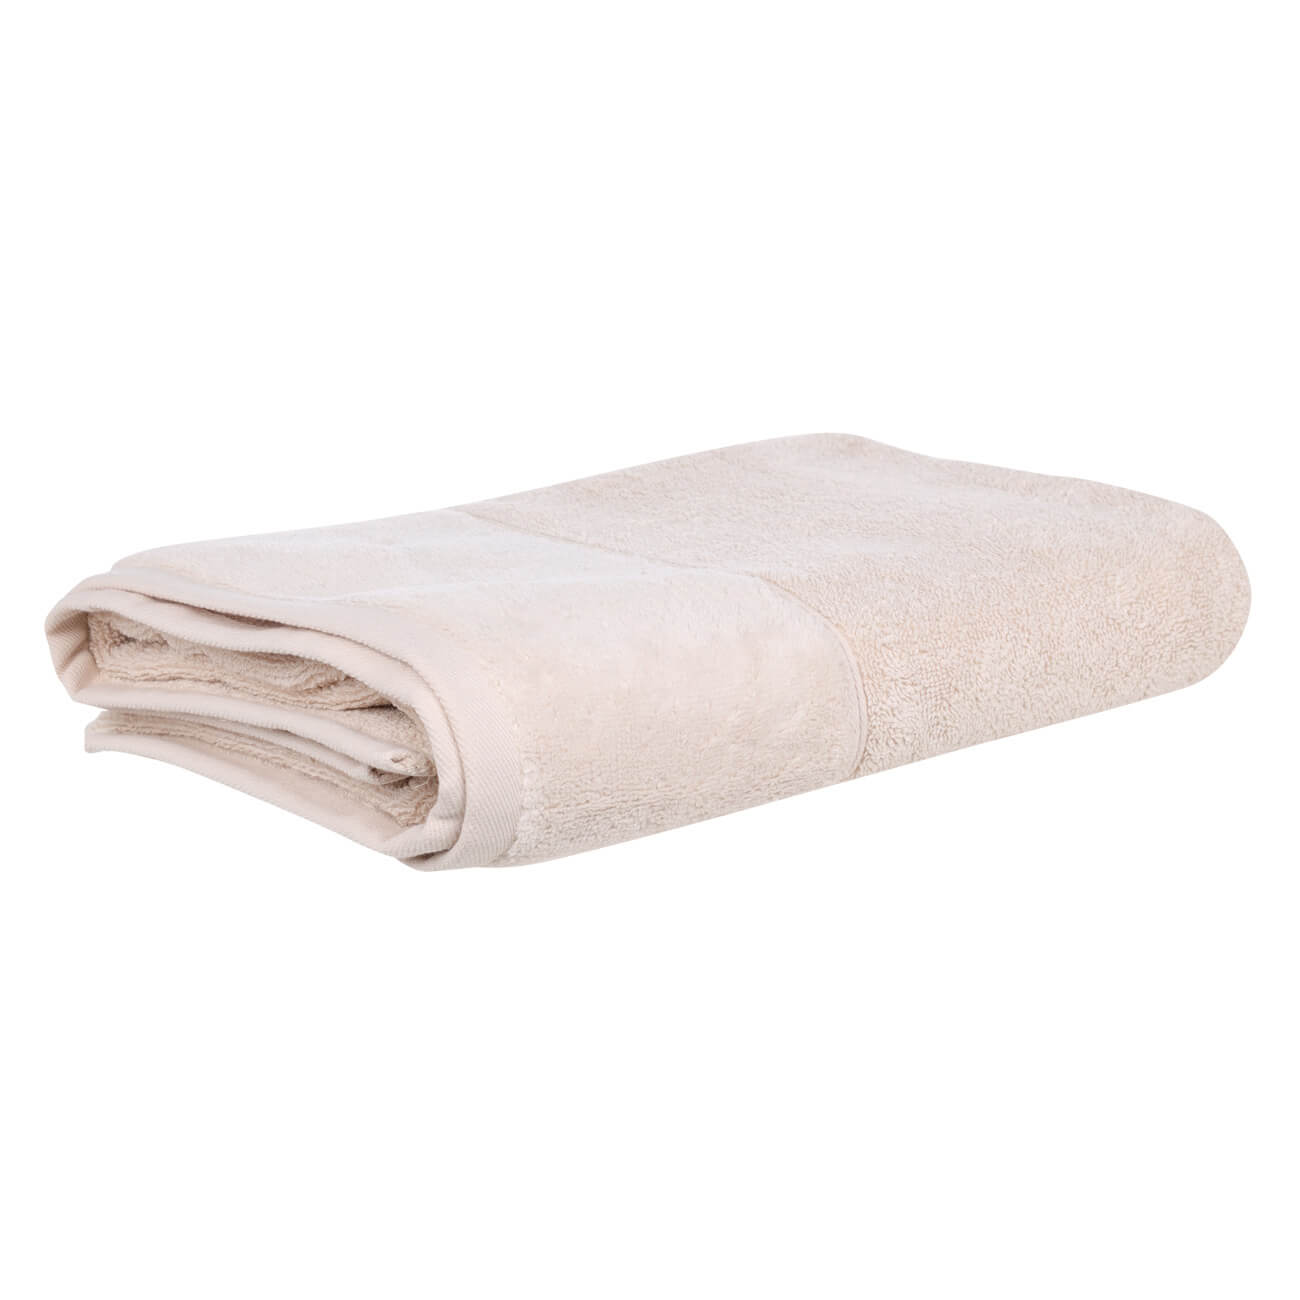 kuchenland полотенце 30х30 см 6 шт в корзине с бантом хлопок бежевое белое basket towel Полотенце, 70х140 см, хлопок, бежевое, Velvet touch